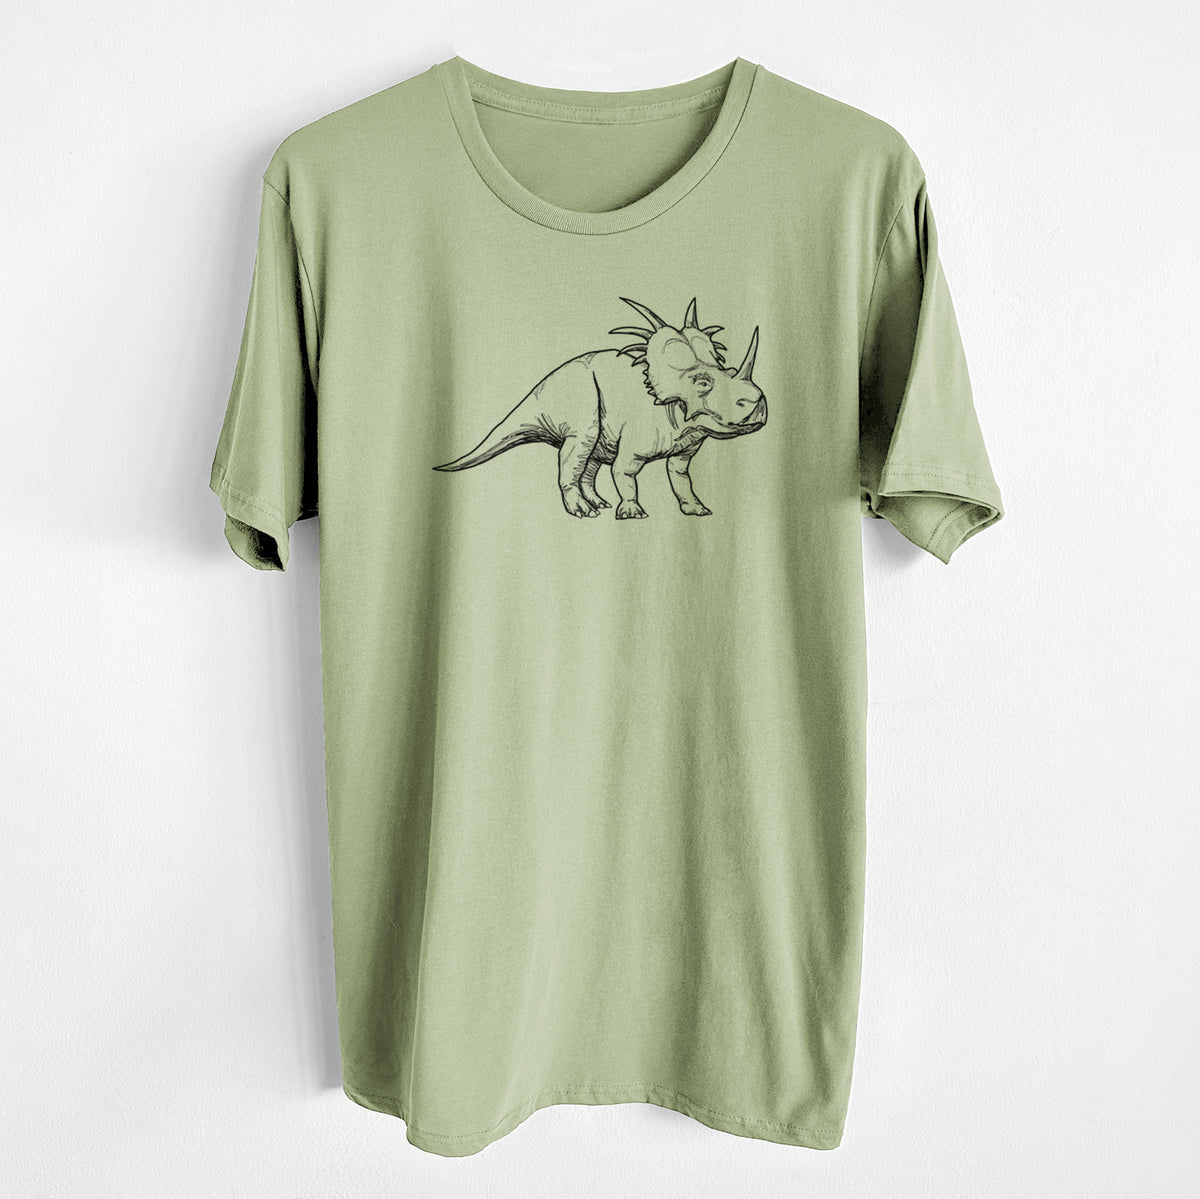 Styracosaurus Albertensis - Unisex Crewneck - Made in USA - 100% Organic Cotton